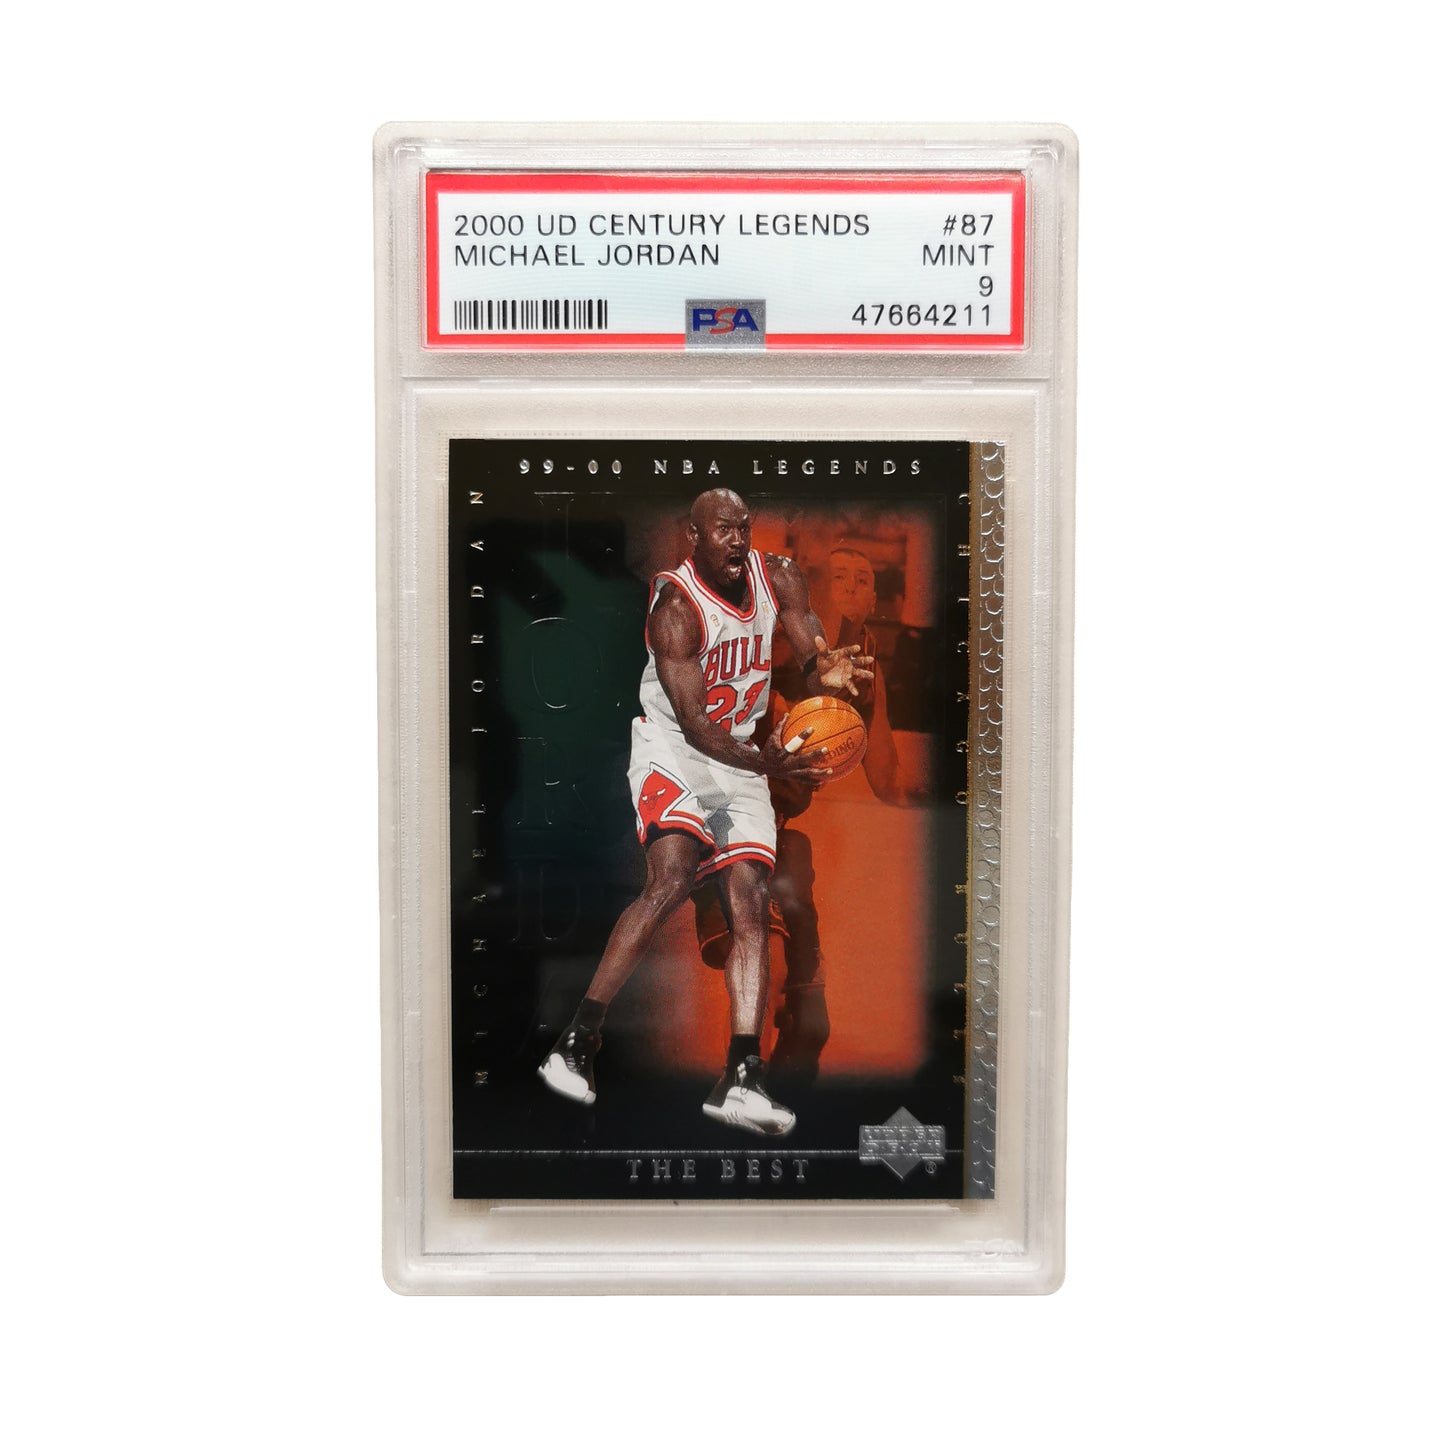 2000 Upper Deck UD Century Legends Michael Jordan #87 Mint PSA 9